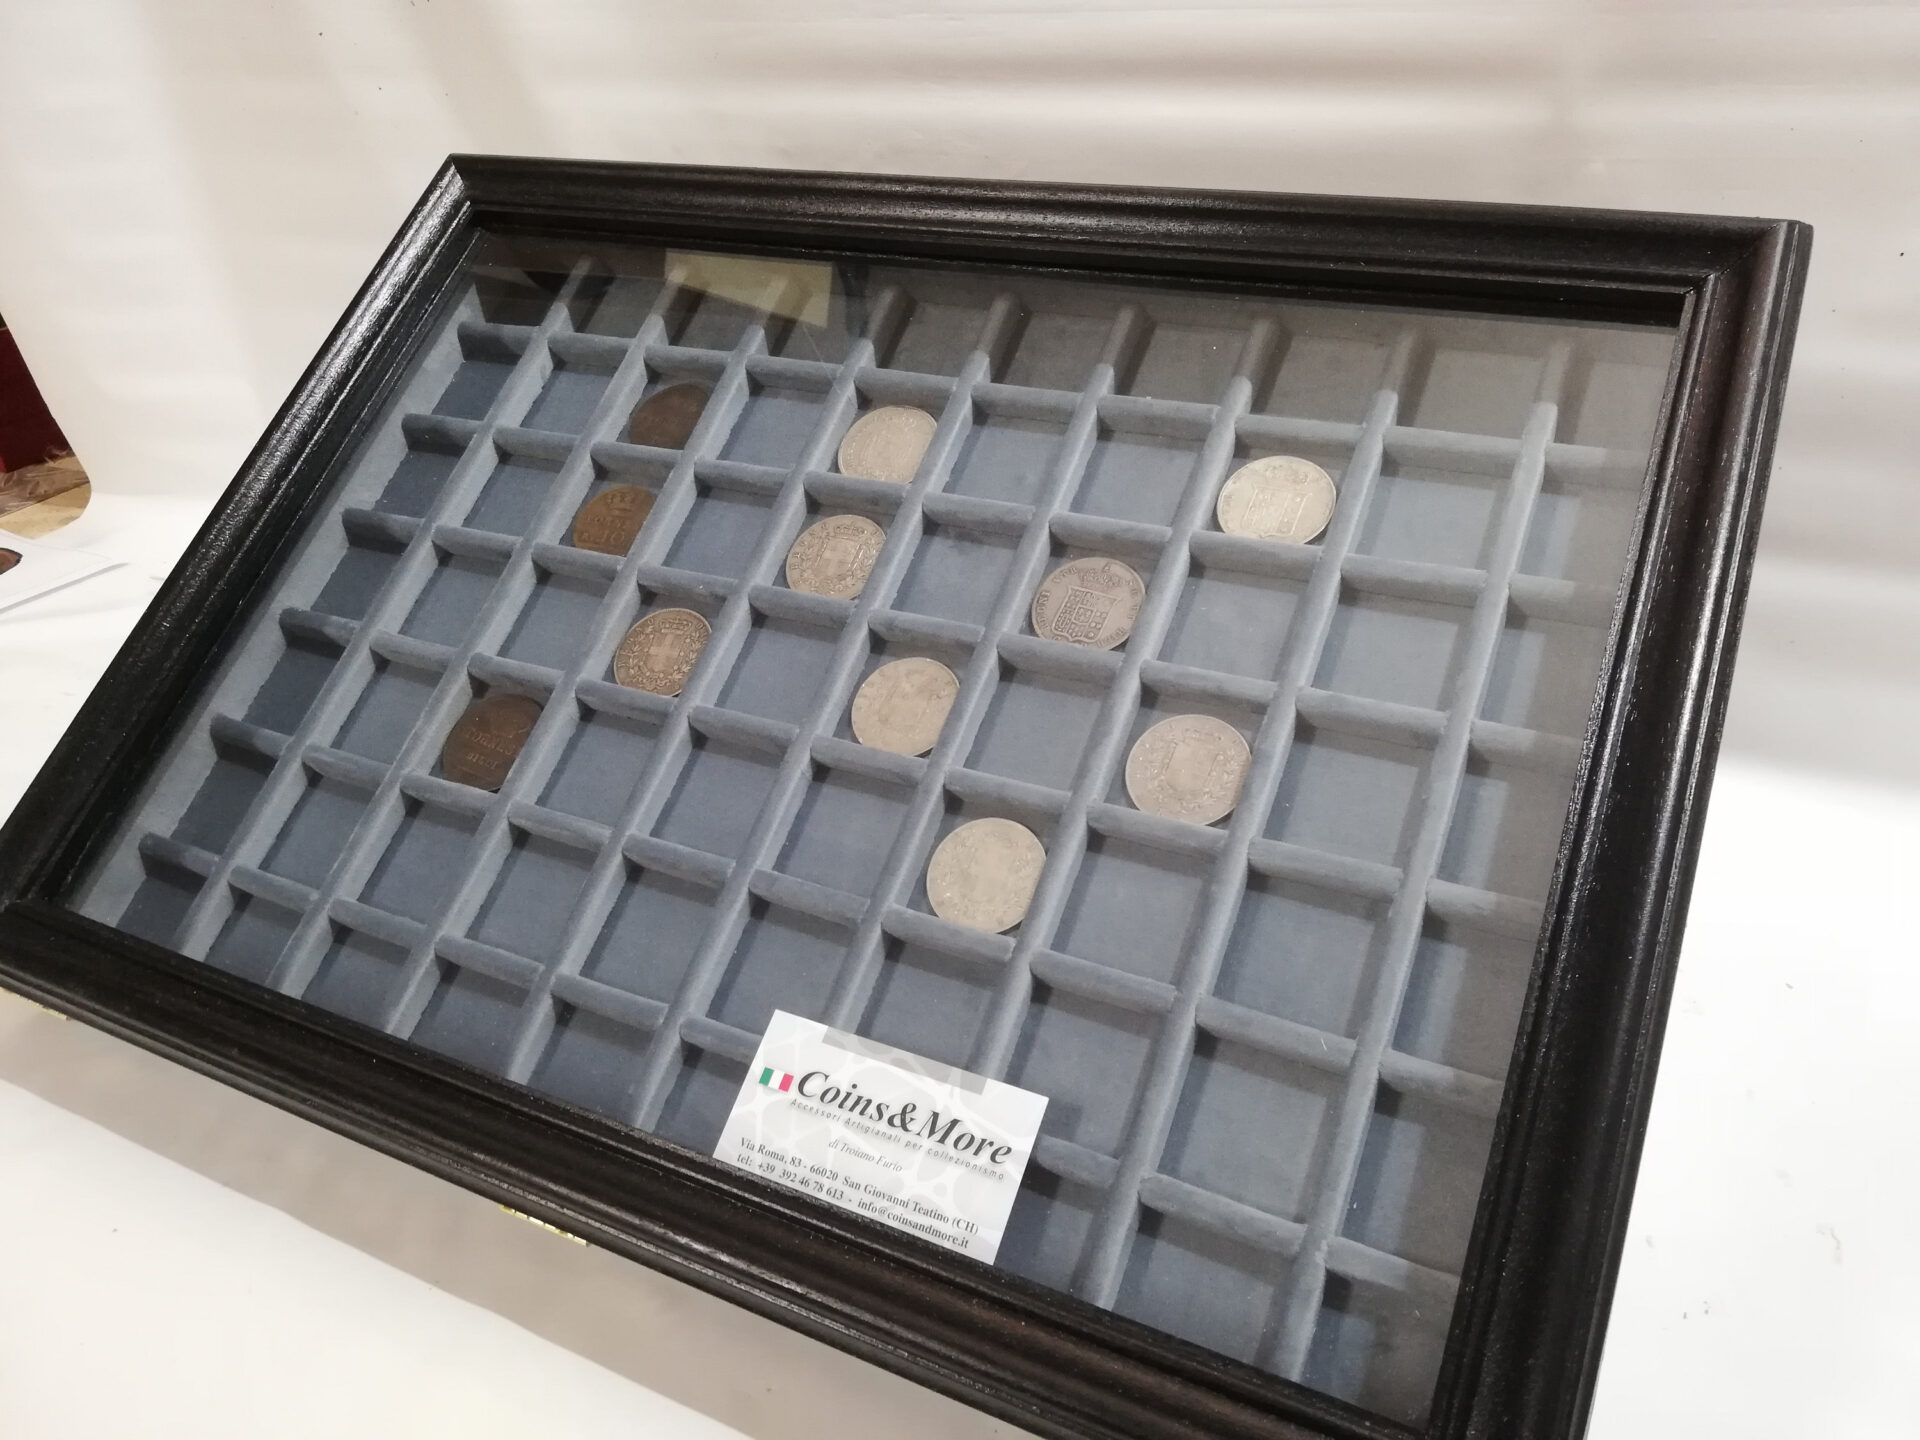 Teca vetrina espositore in legno per collezionismo espositore per monete  capsule quadrum mini coins&more handmade in Italy -  Italia